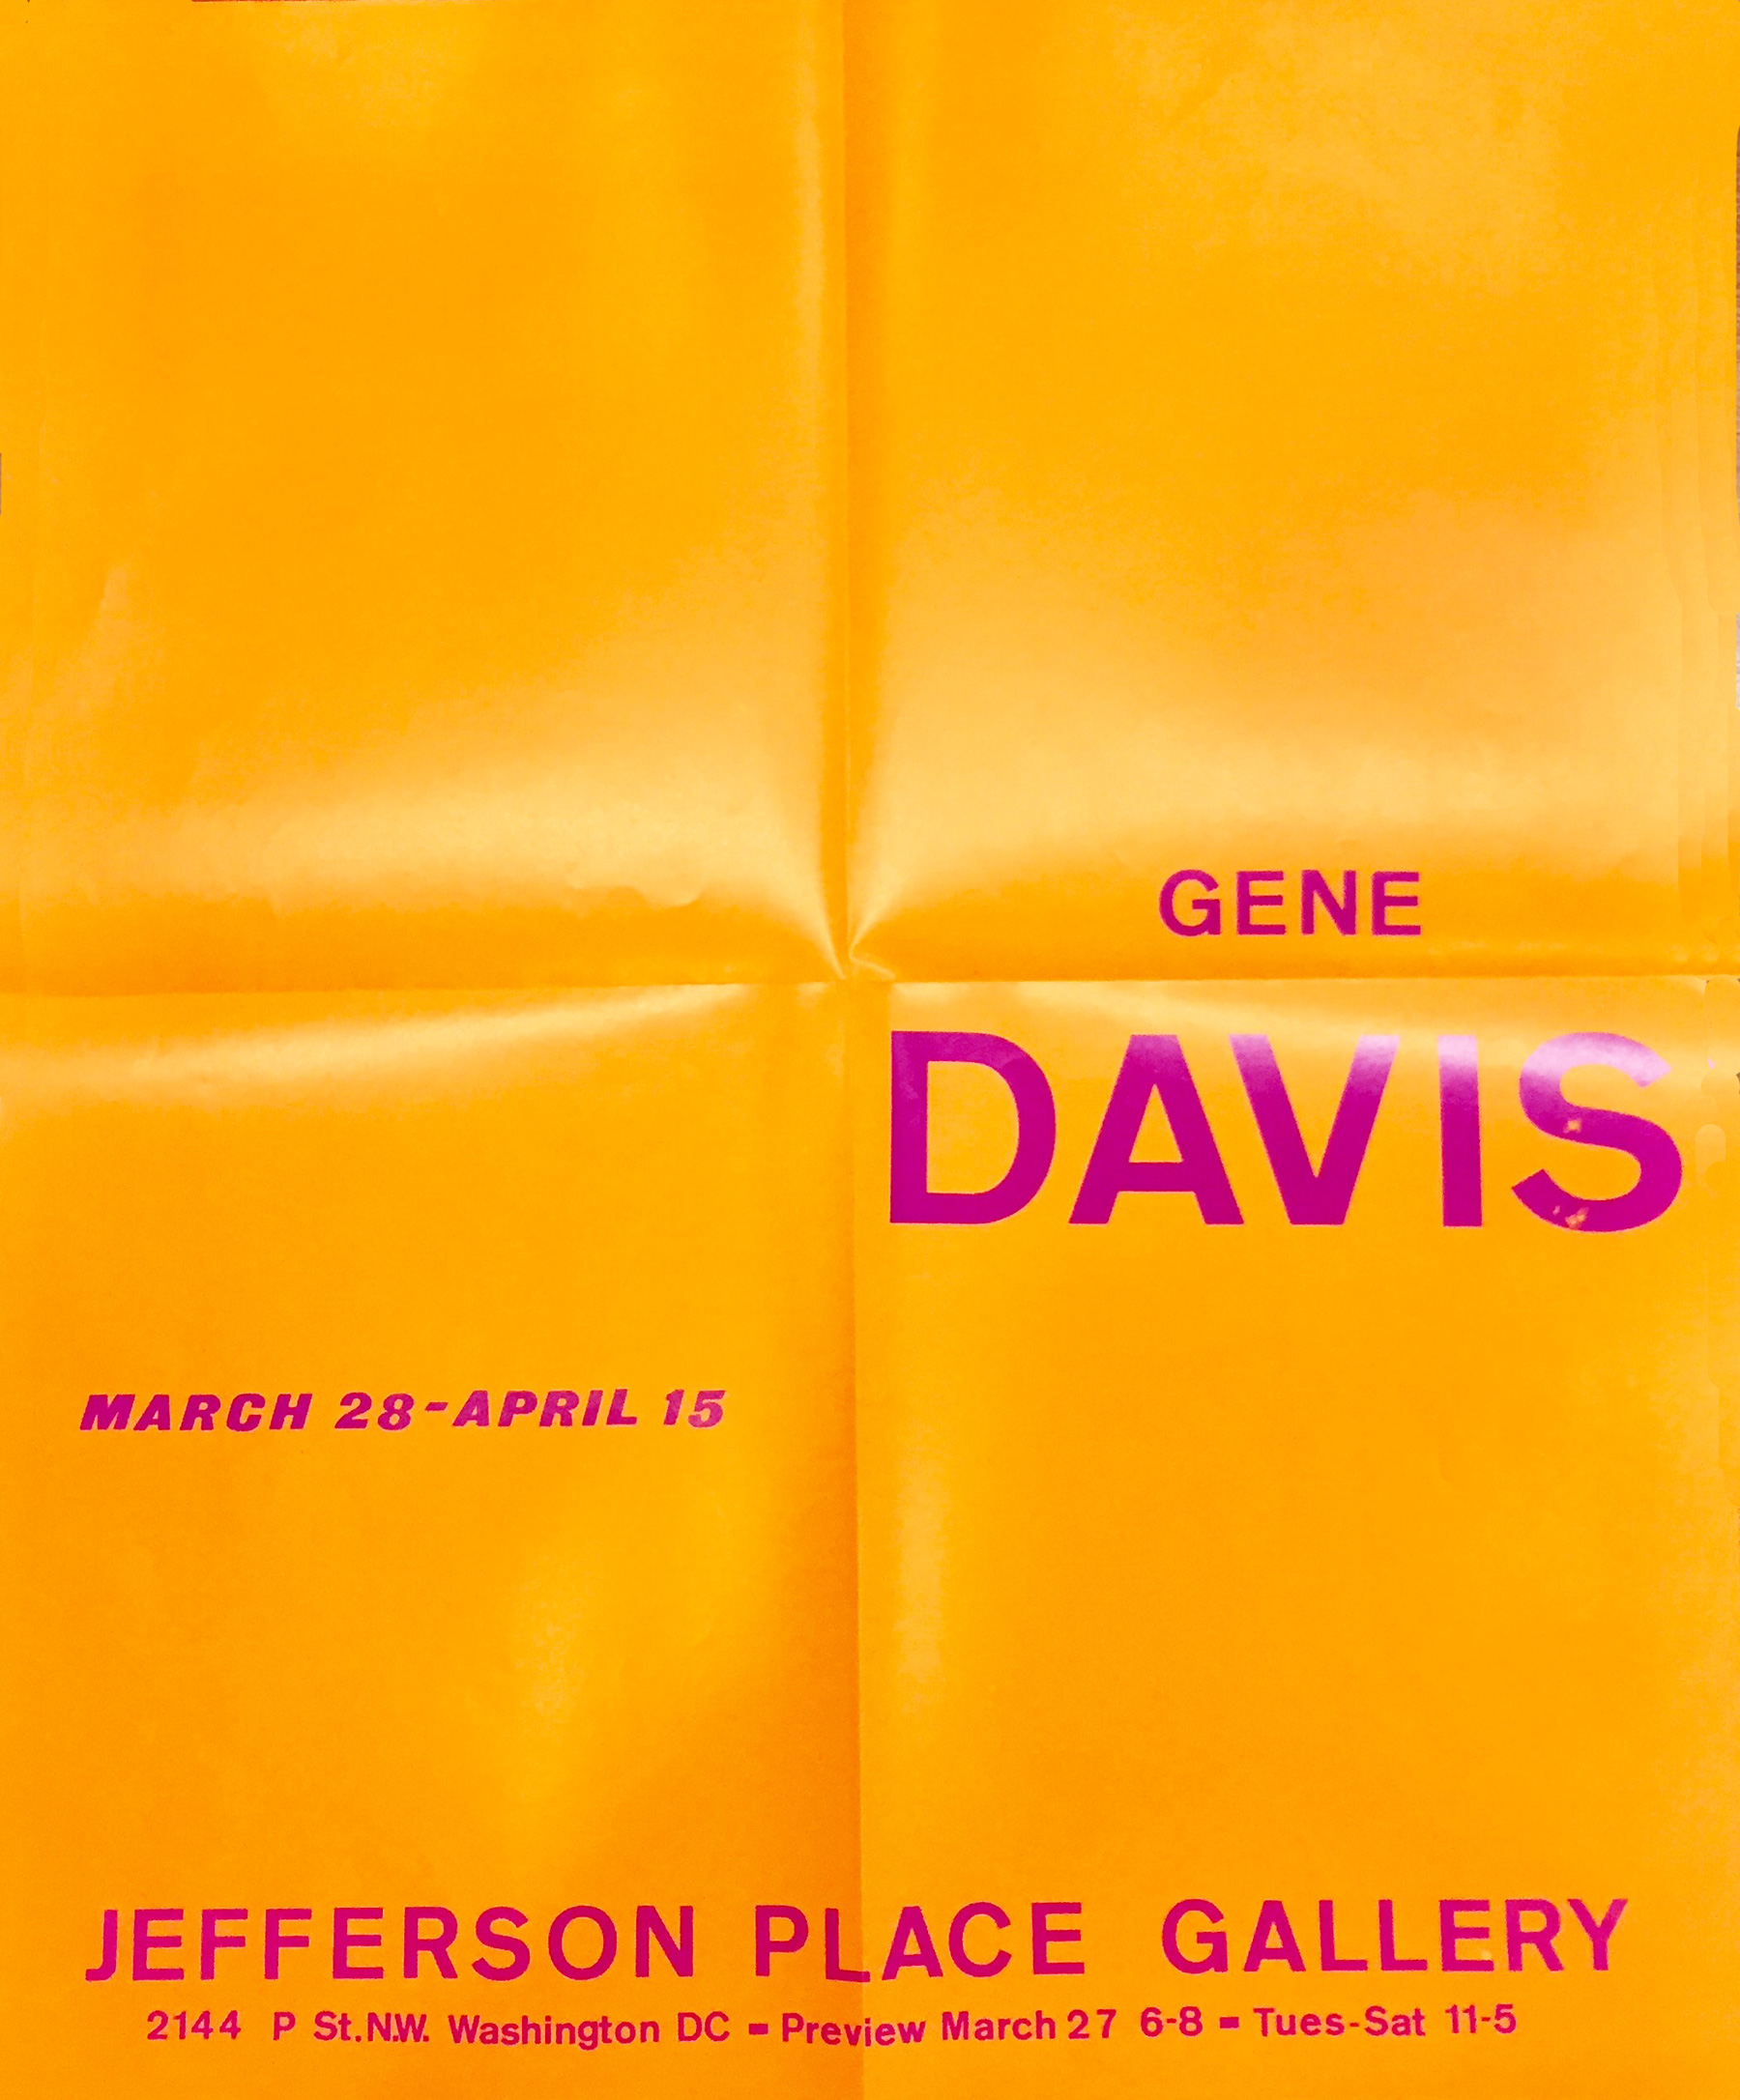 Announcement flier for Gene Davis at Jefferson Place Gallery